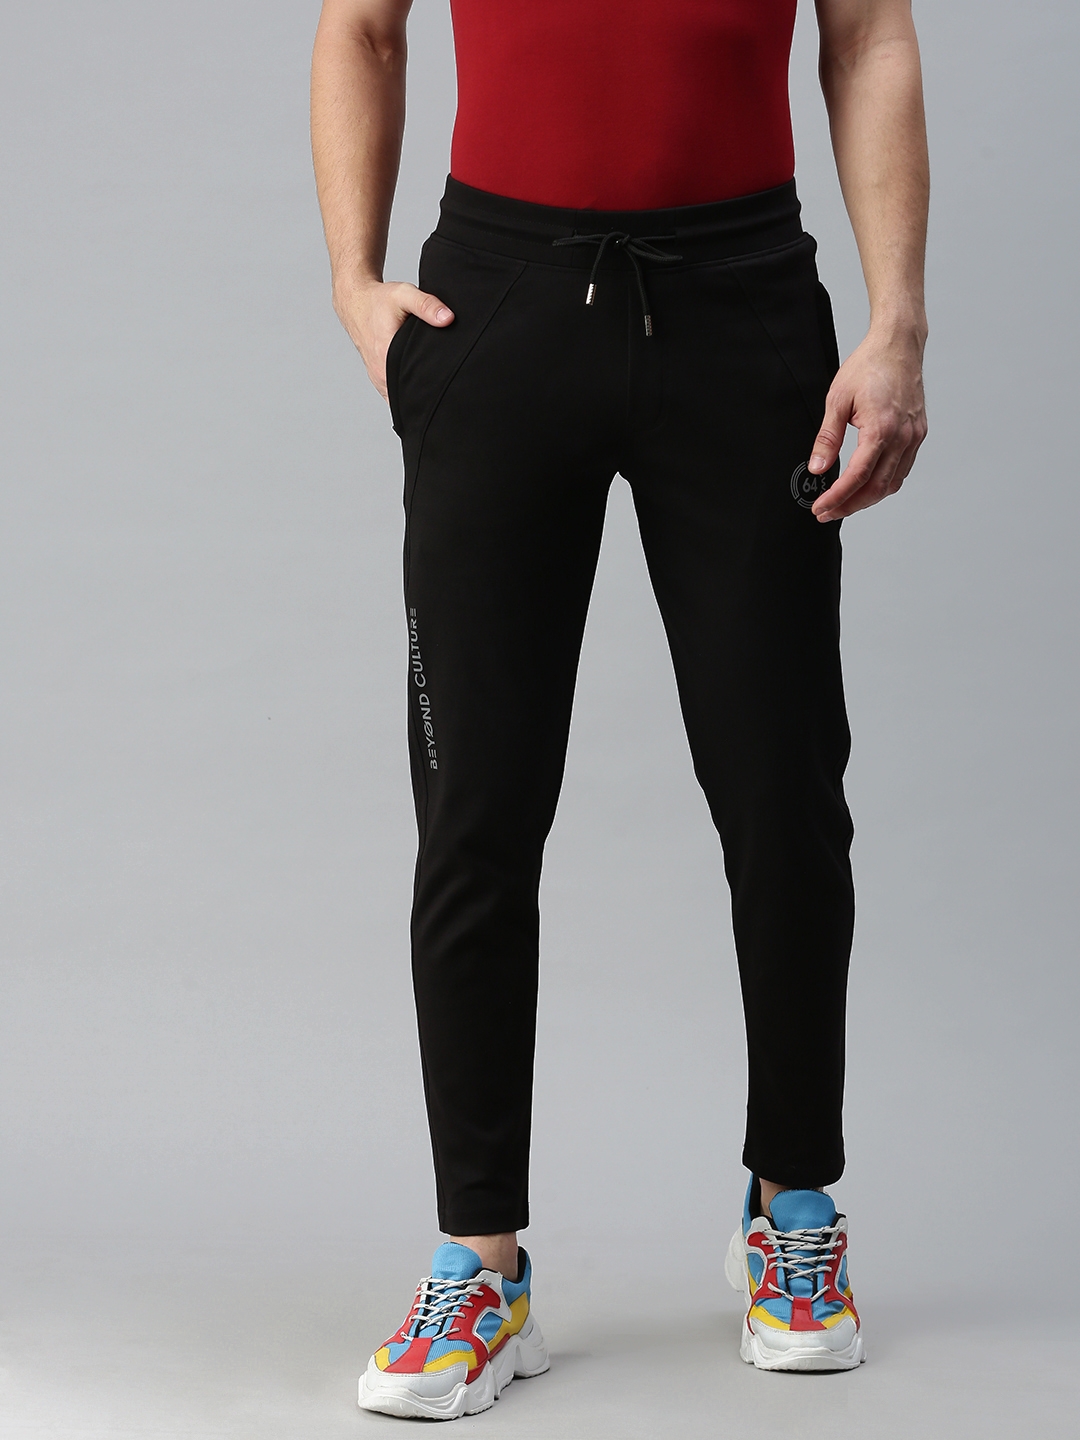 Sports52 Wear Slim Fit Track Pants - Buy Sports52 Wear Slim Fit Track Pants  online in India